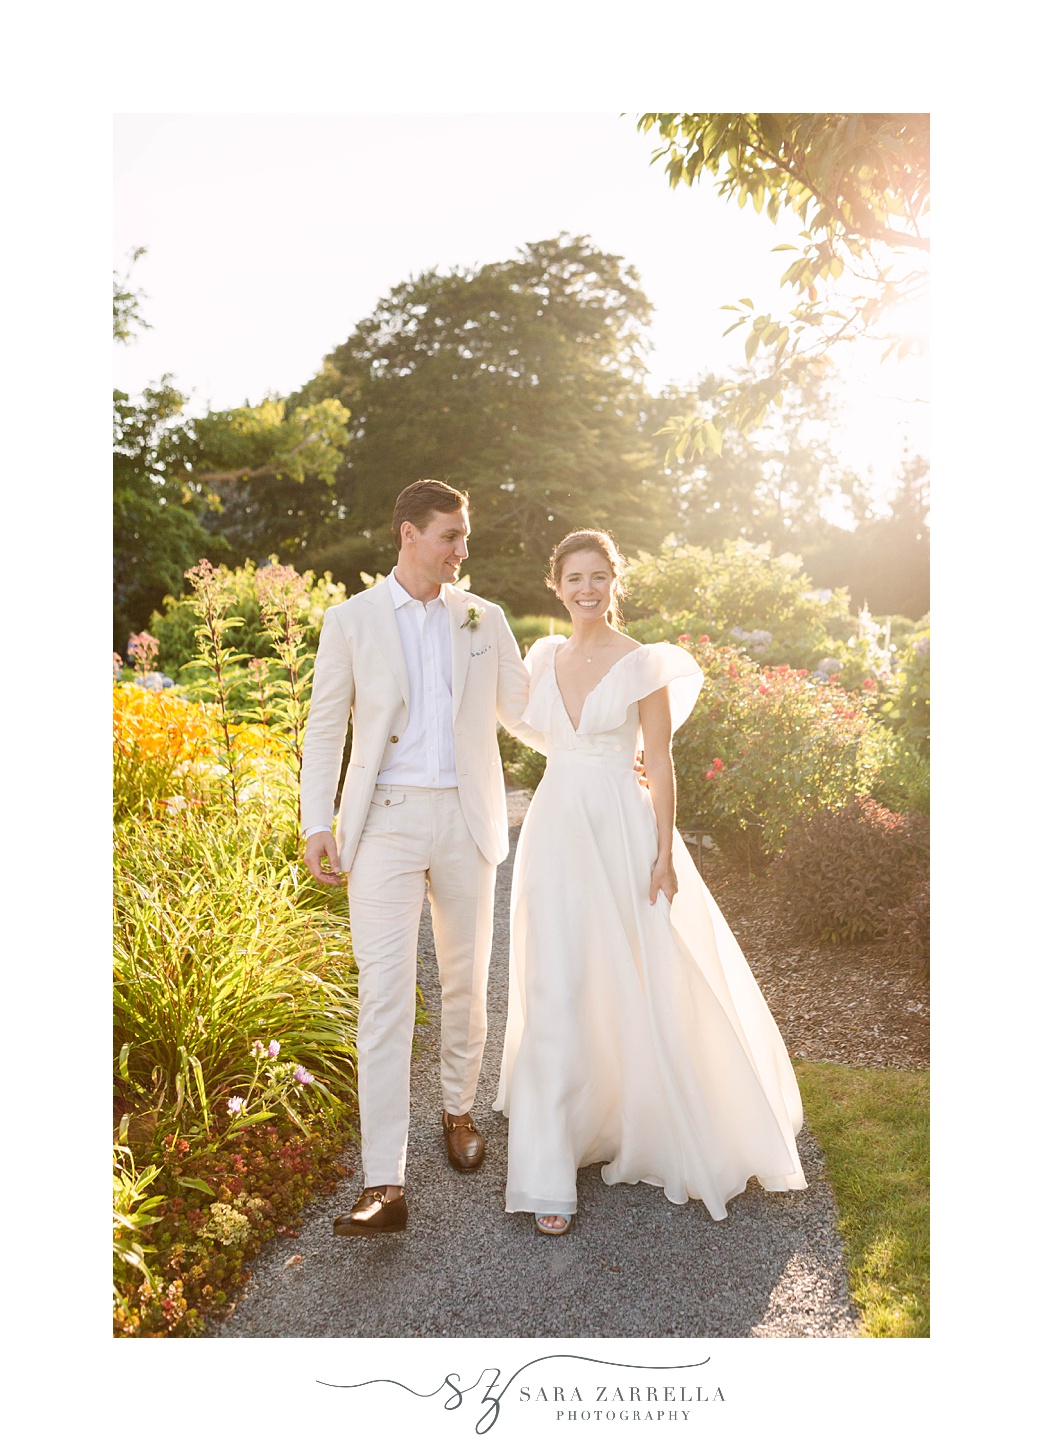 newlyweds walk through gardens in Newport RI